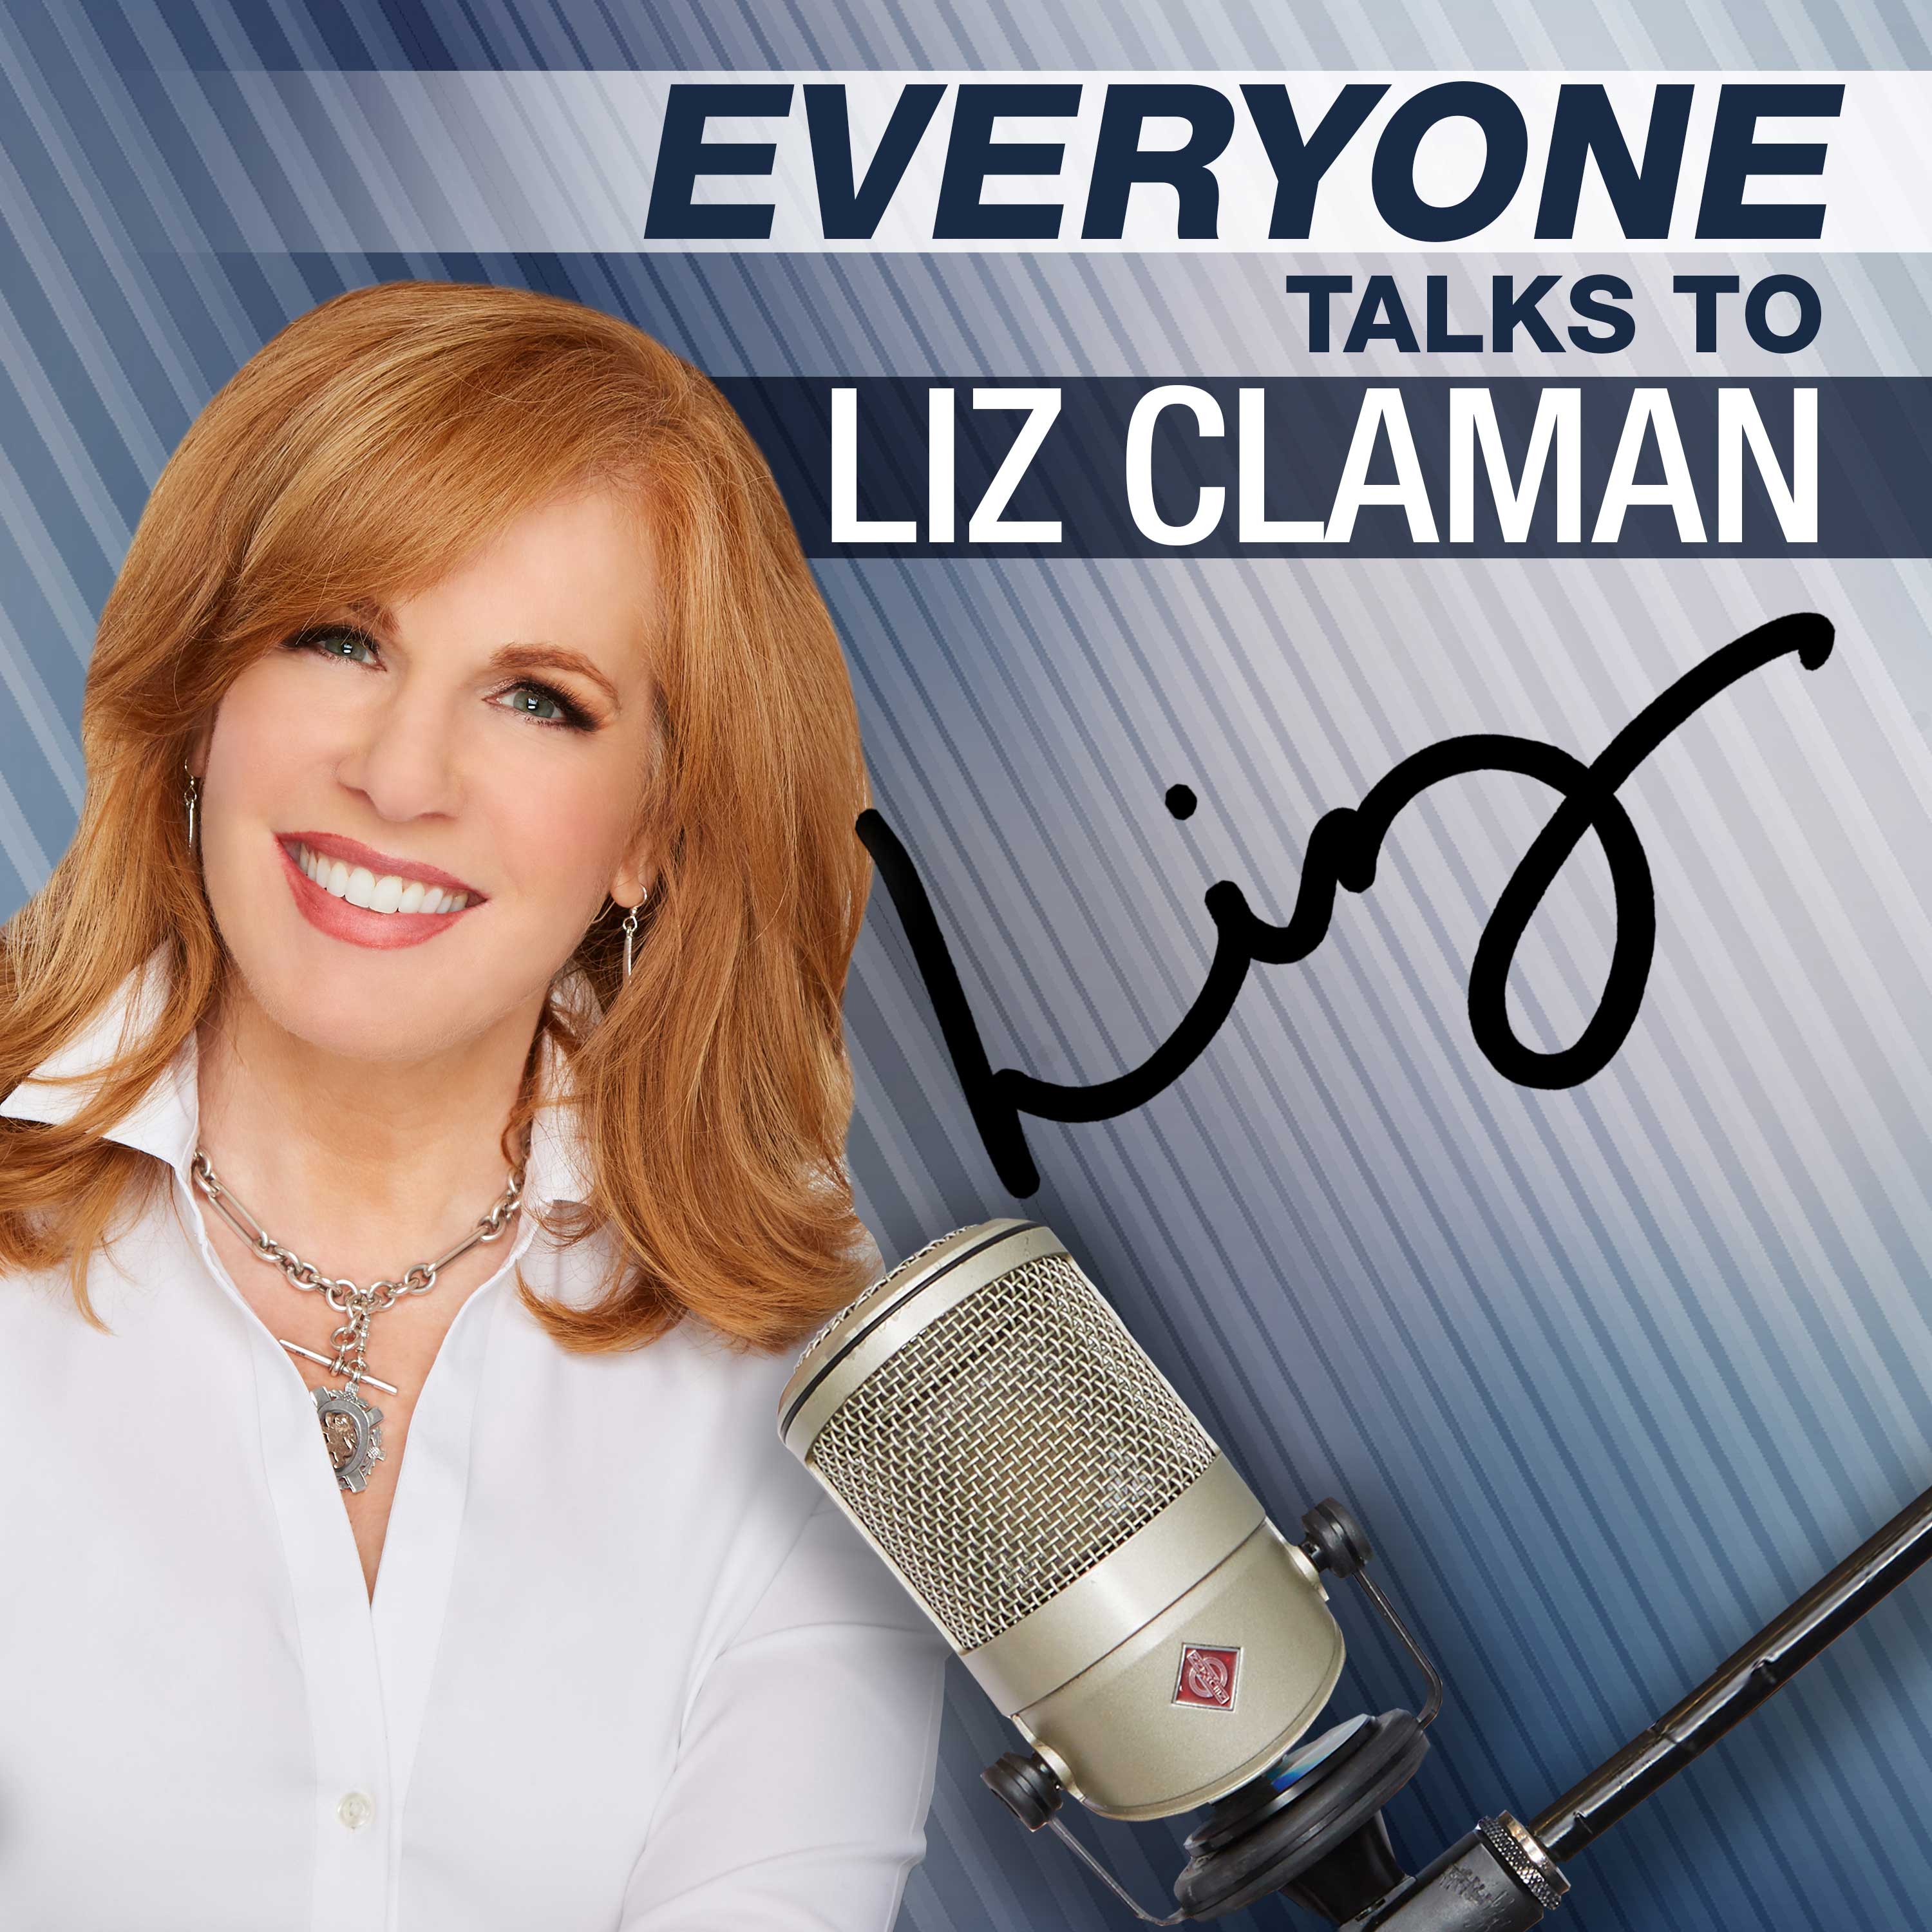 Liz claman podcast